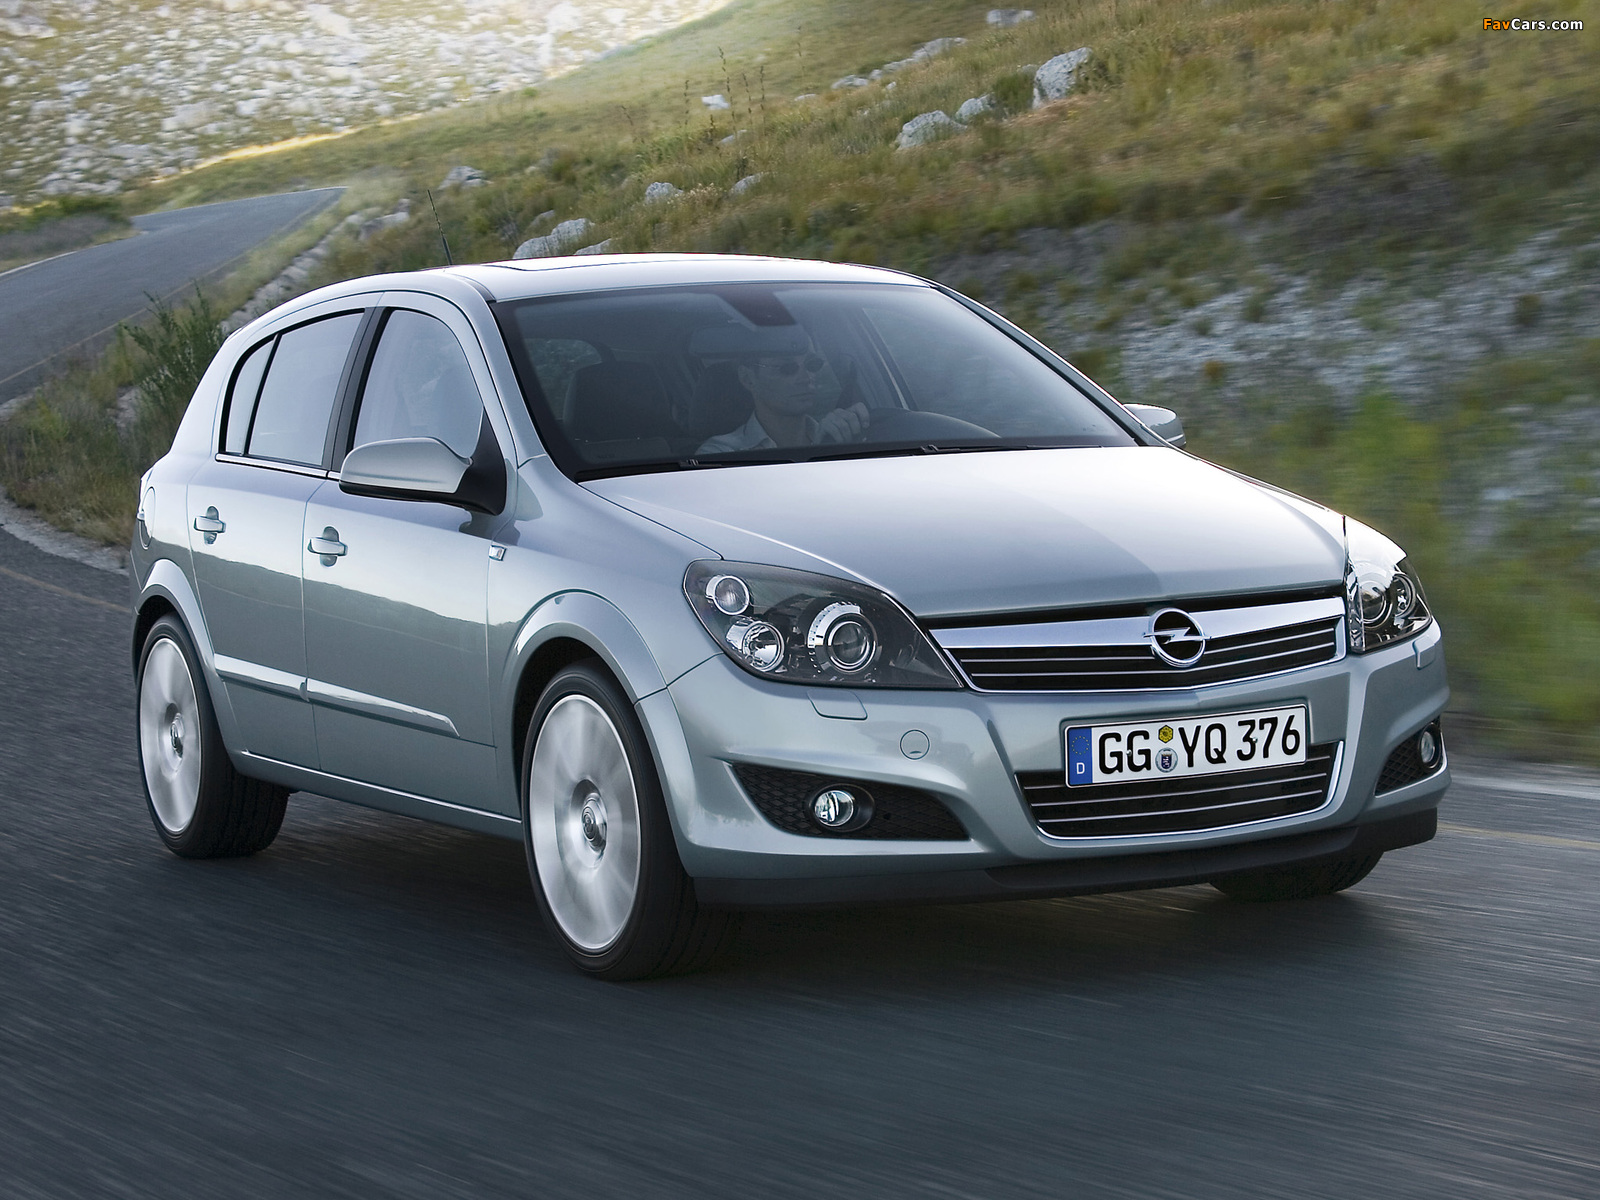 Opel Astra Hatchback (H) 2007 photos (1600 x 1200)